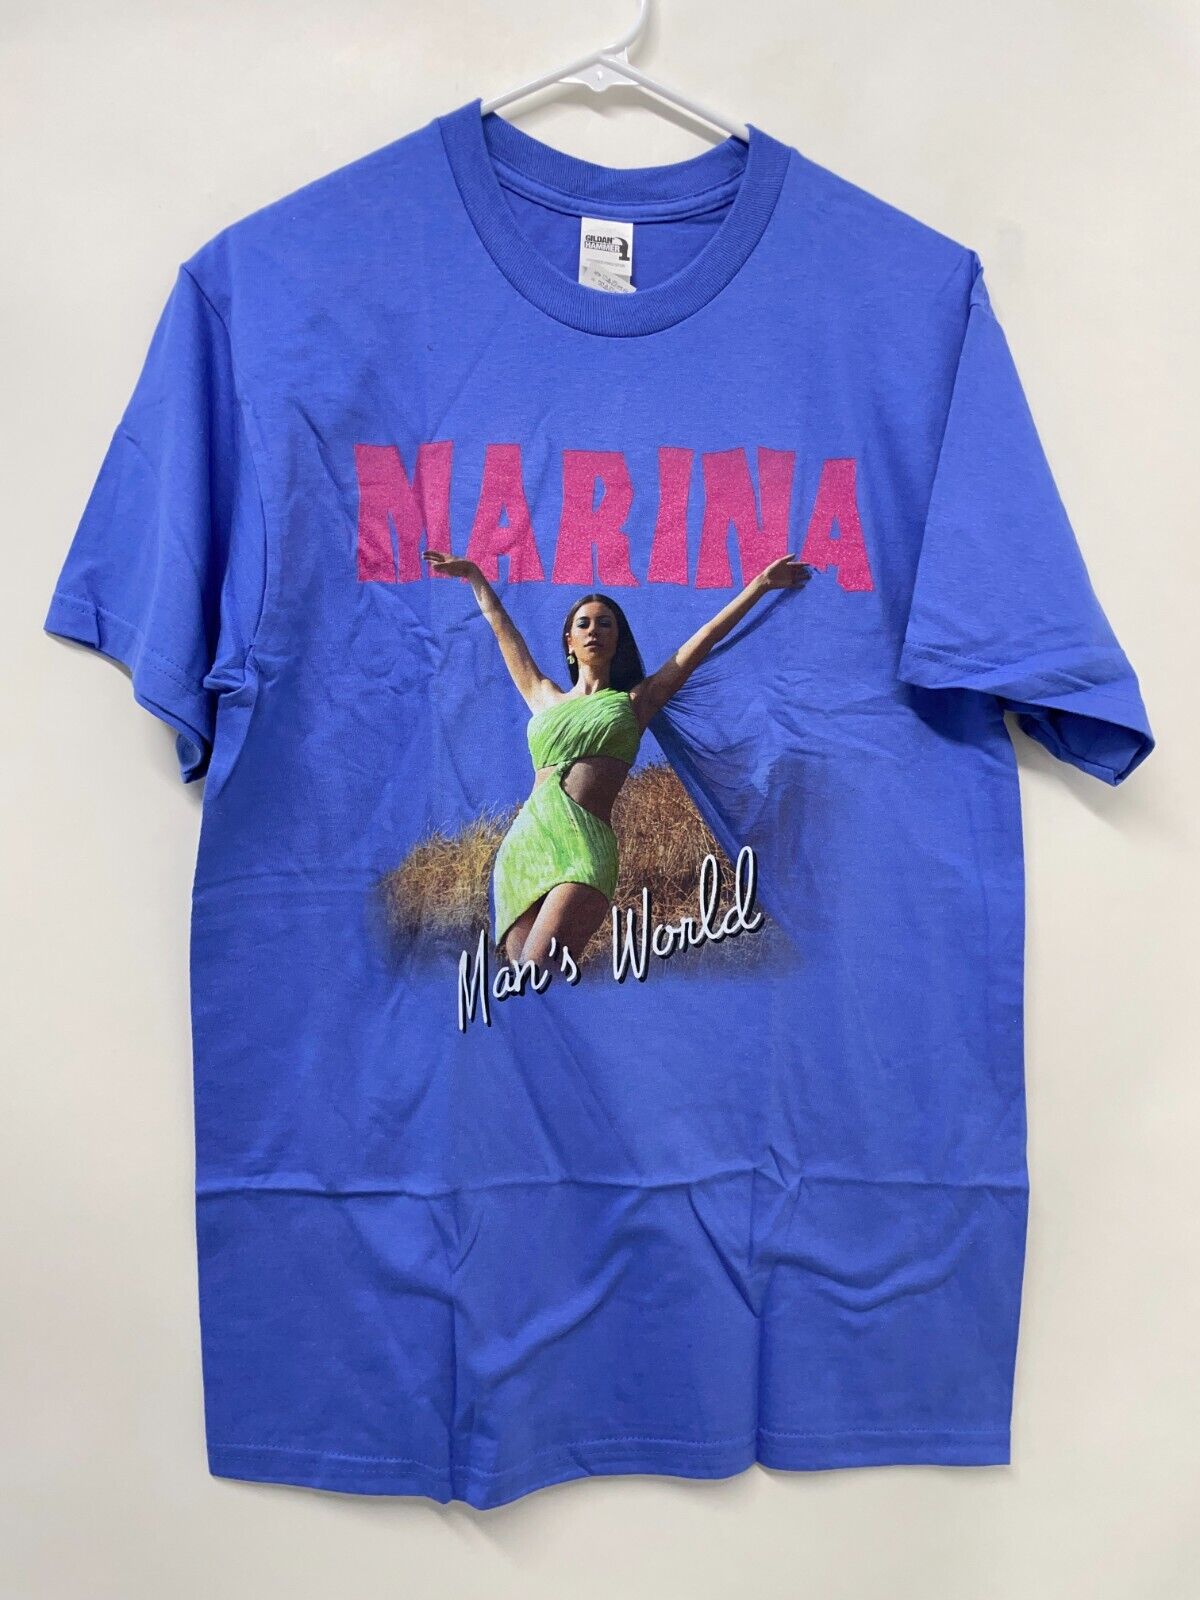 Marina Unisex M Mans World T-Shirt Blue Graphic Tee Short Sleeve Crewneck Pop